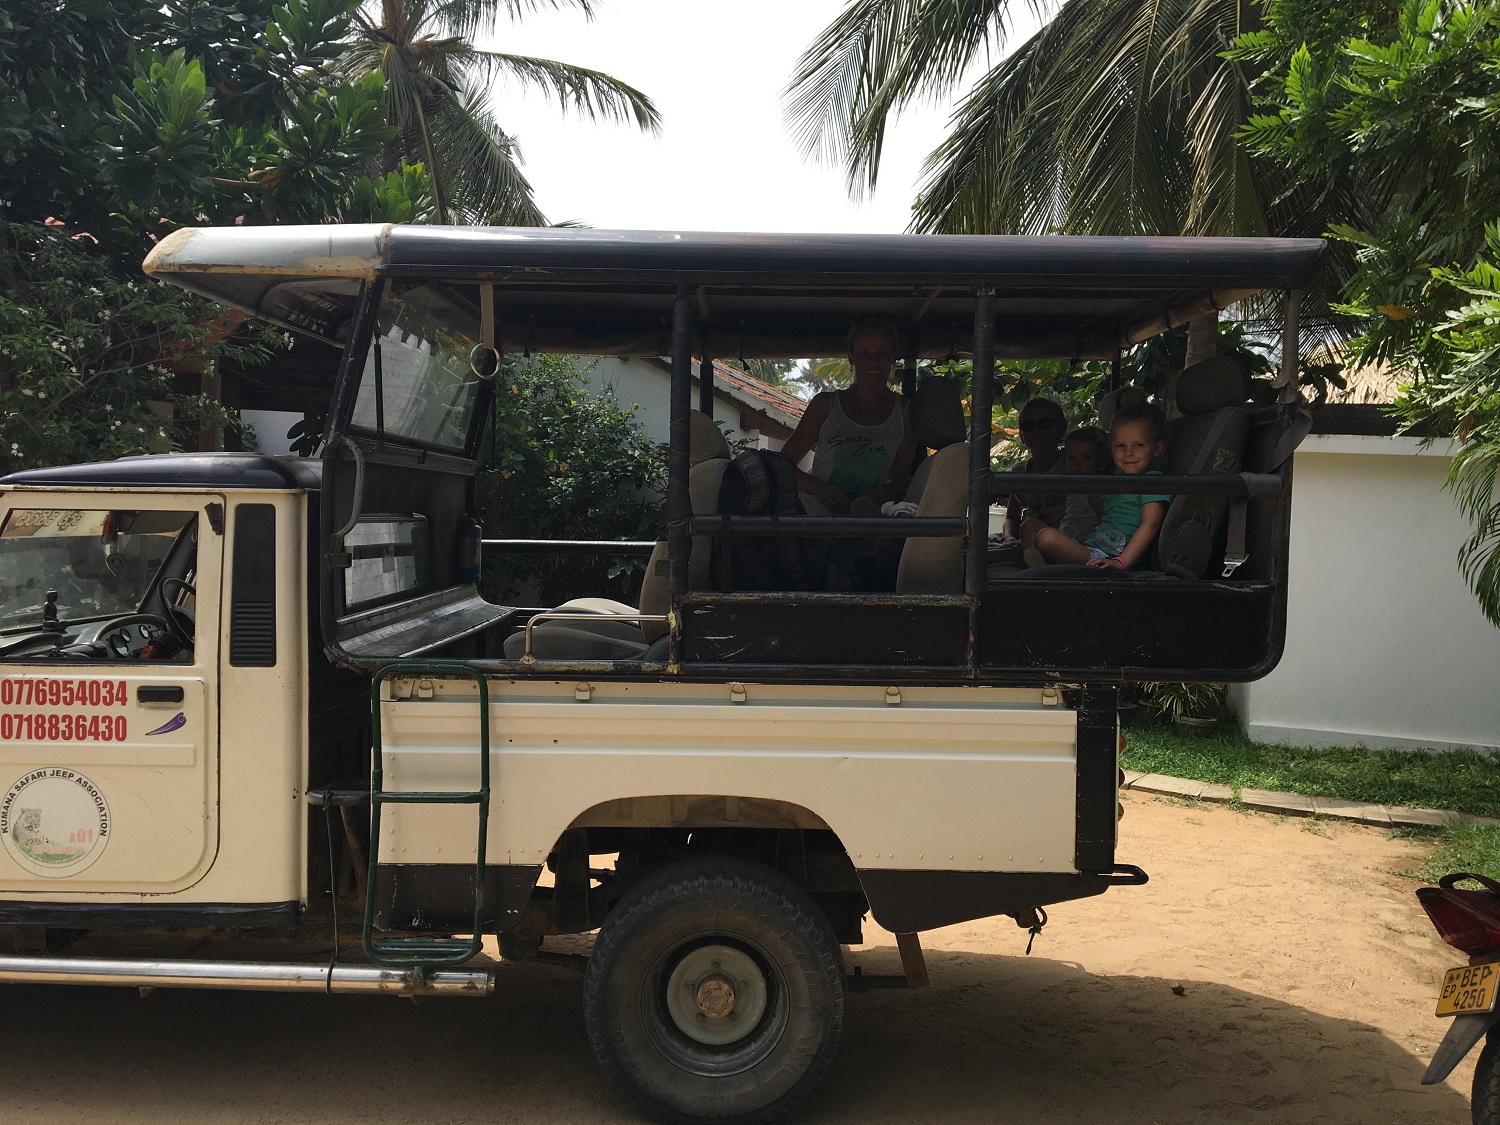 Kids Love Travel: Sri Lanka with kids